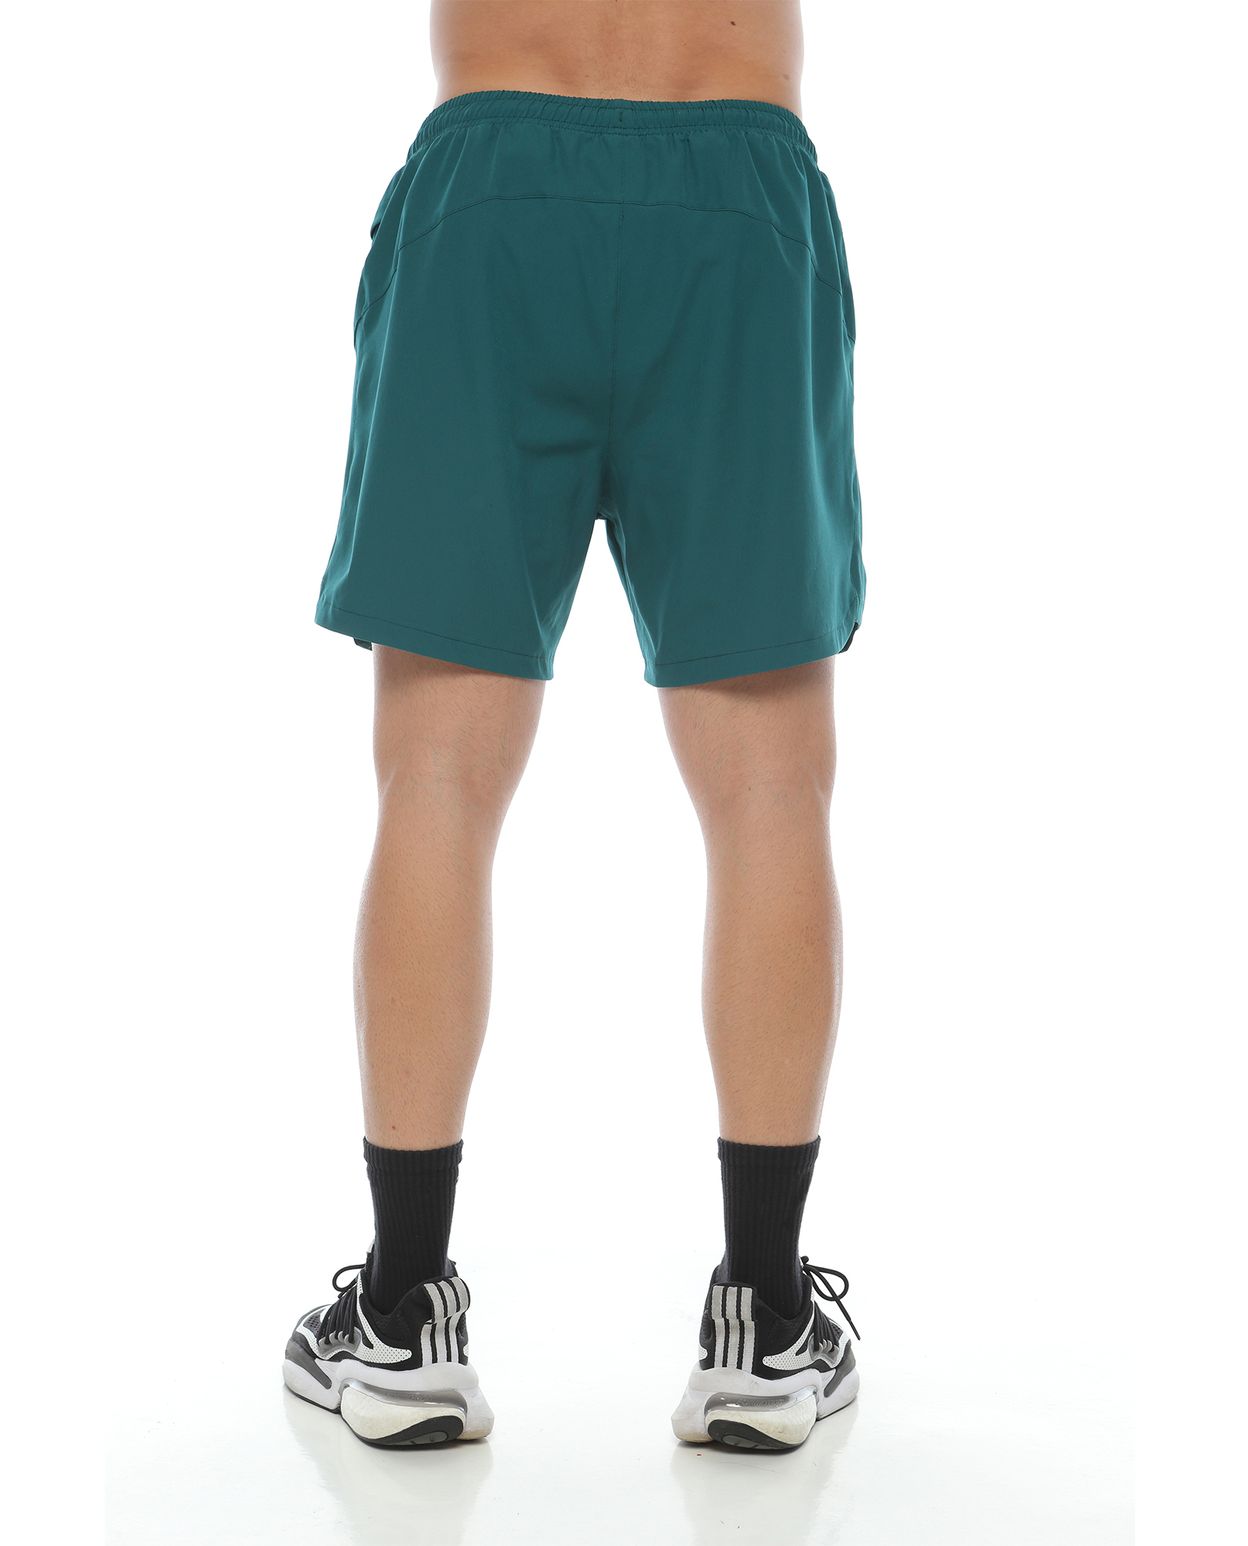 Pantaloneta deportiva hombre, color azul - racketball movil